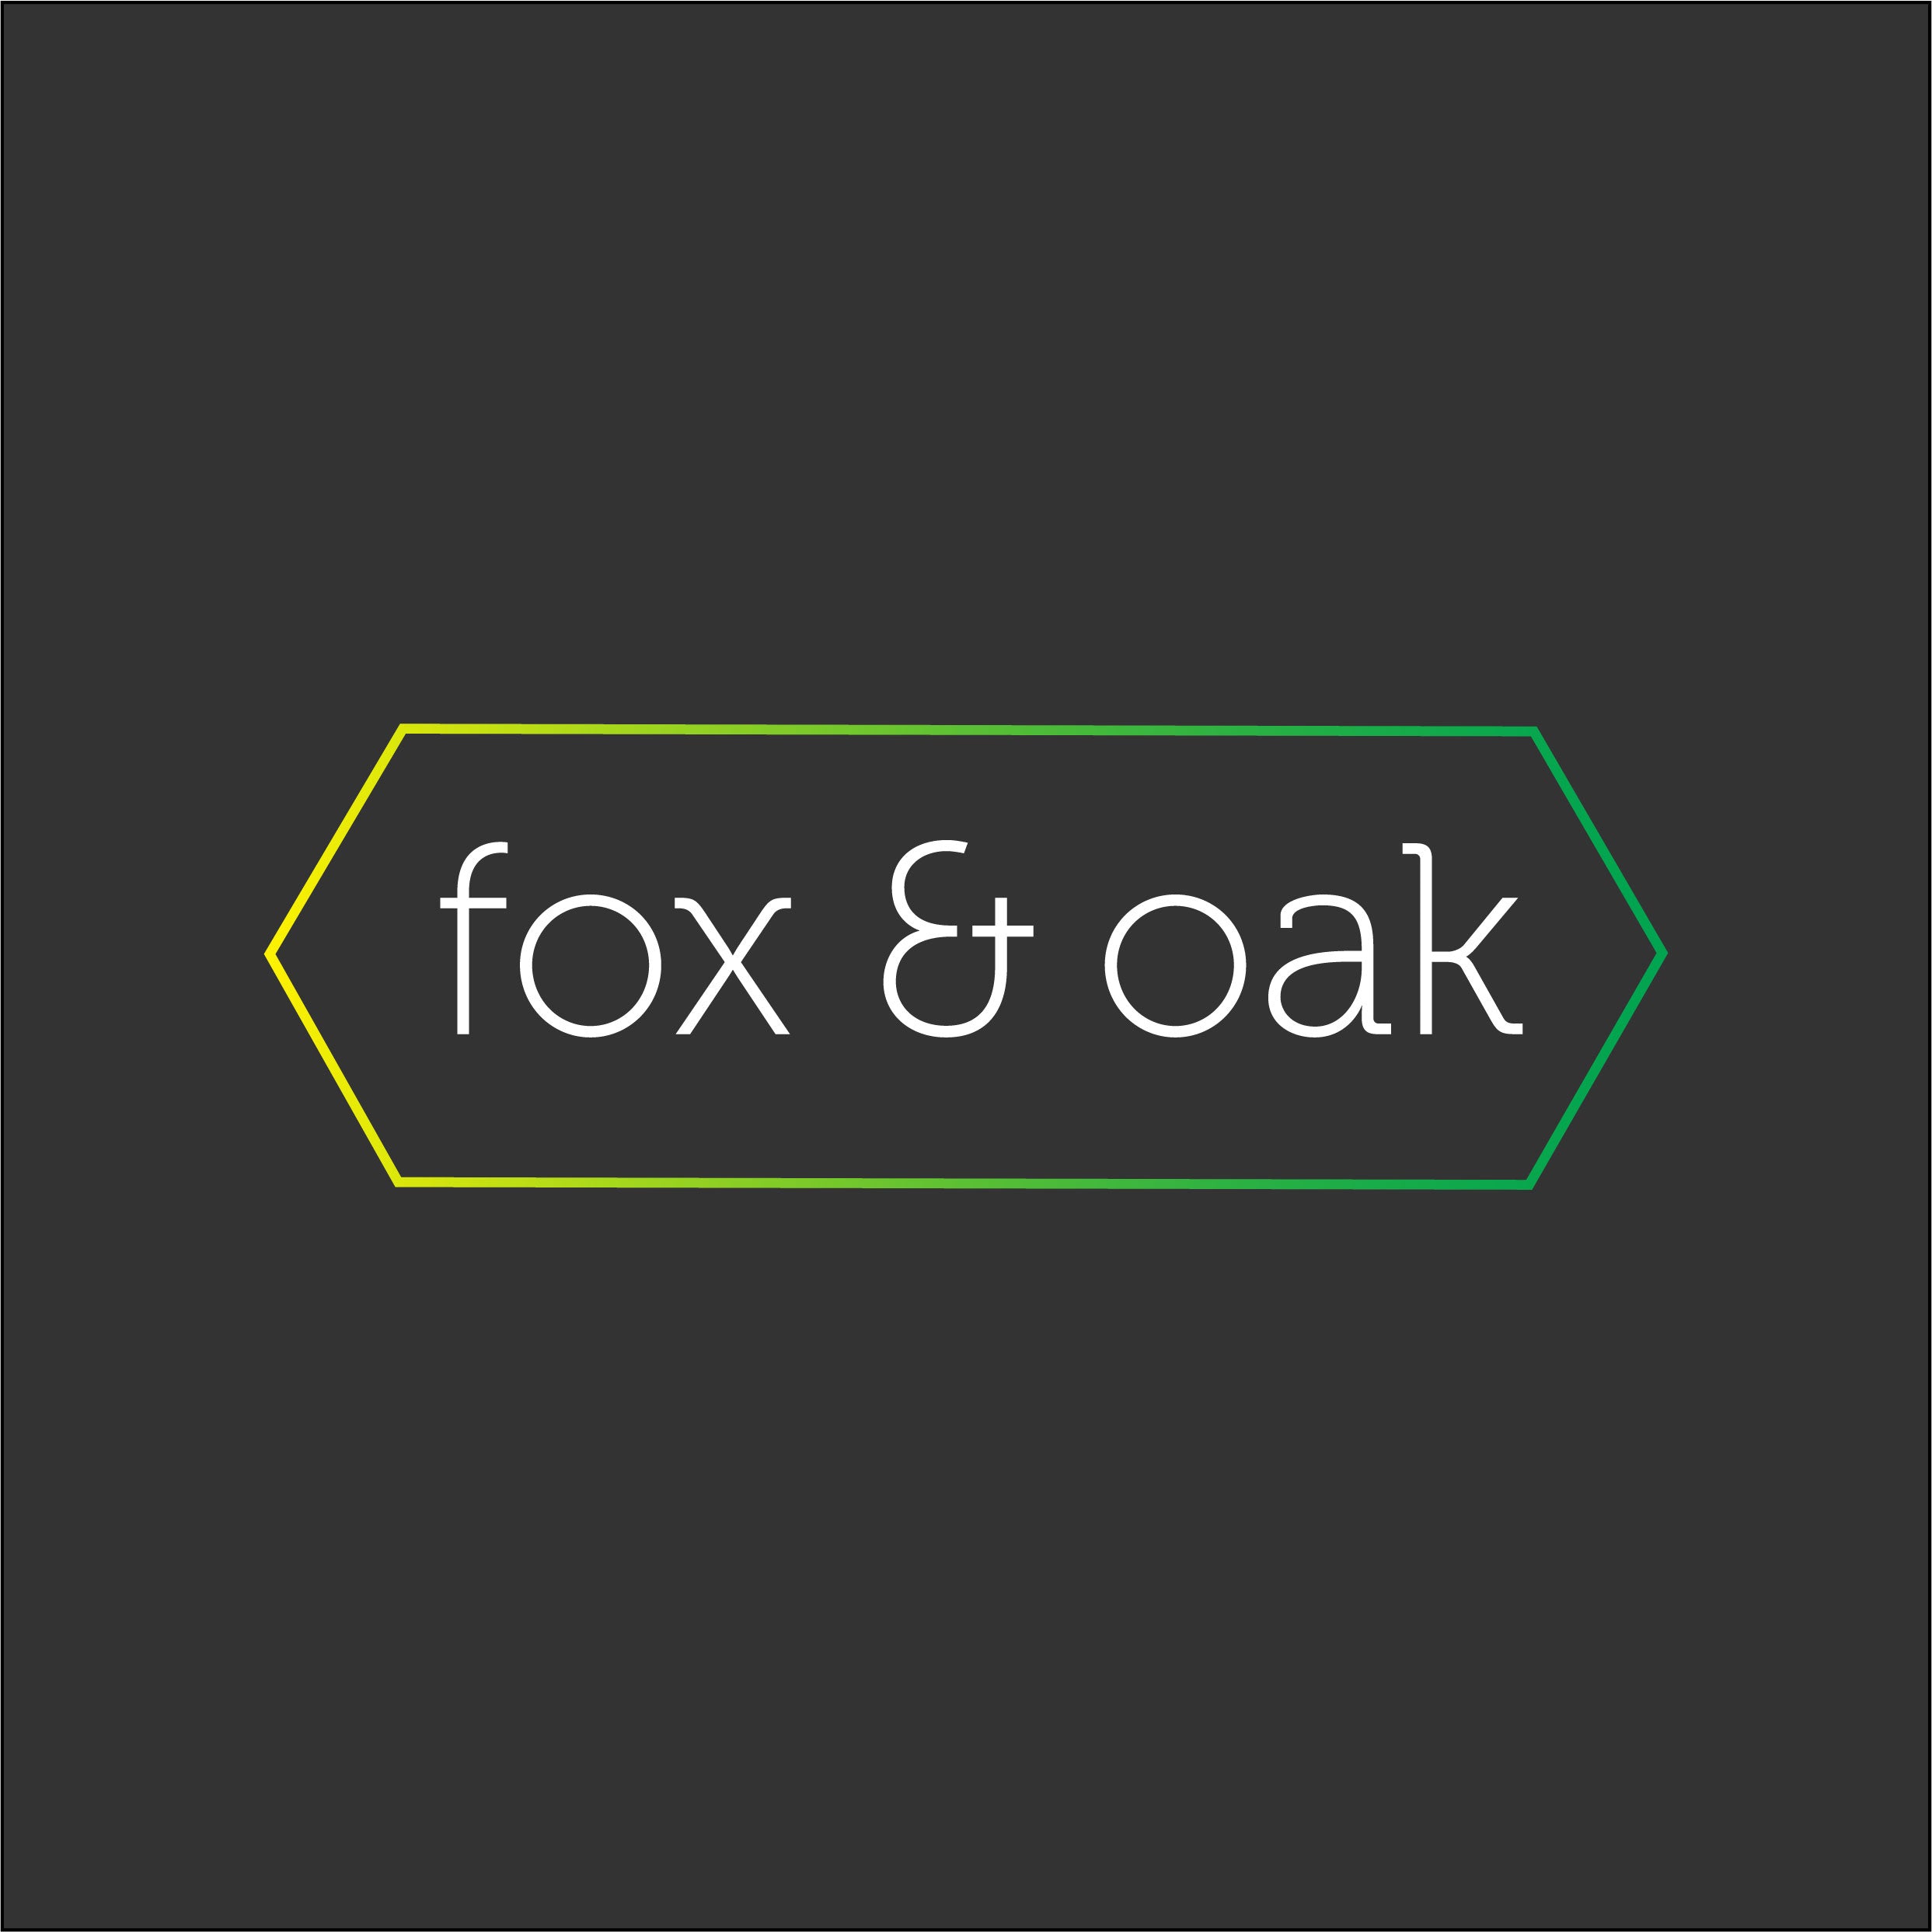 Fox and Oak